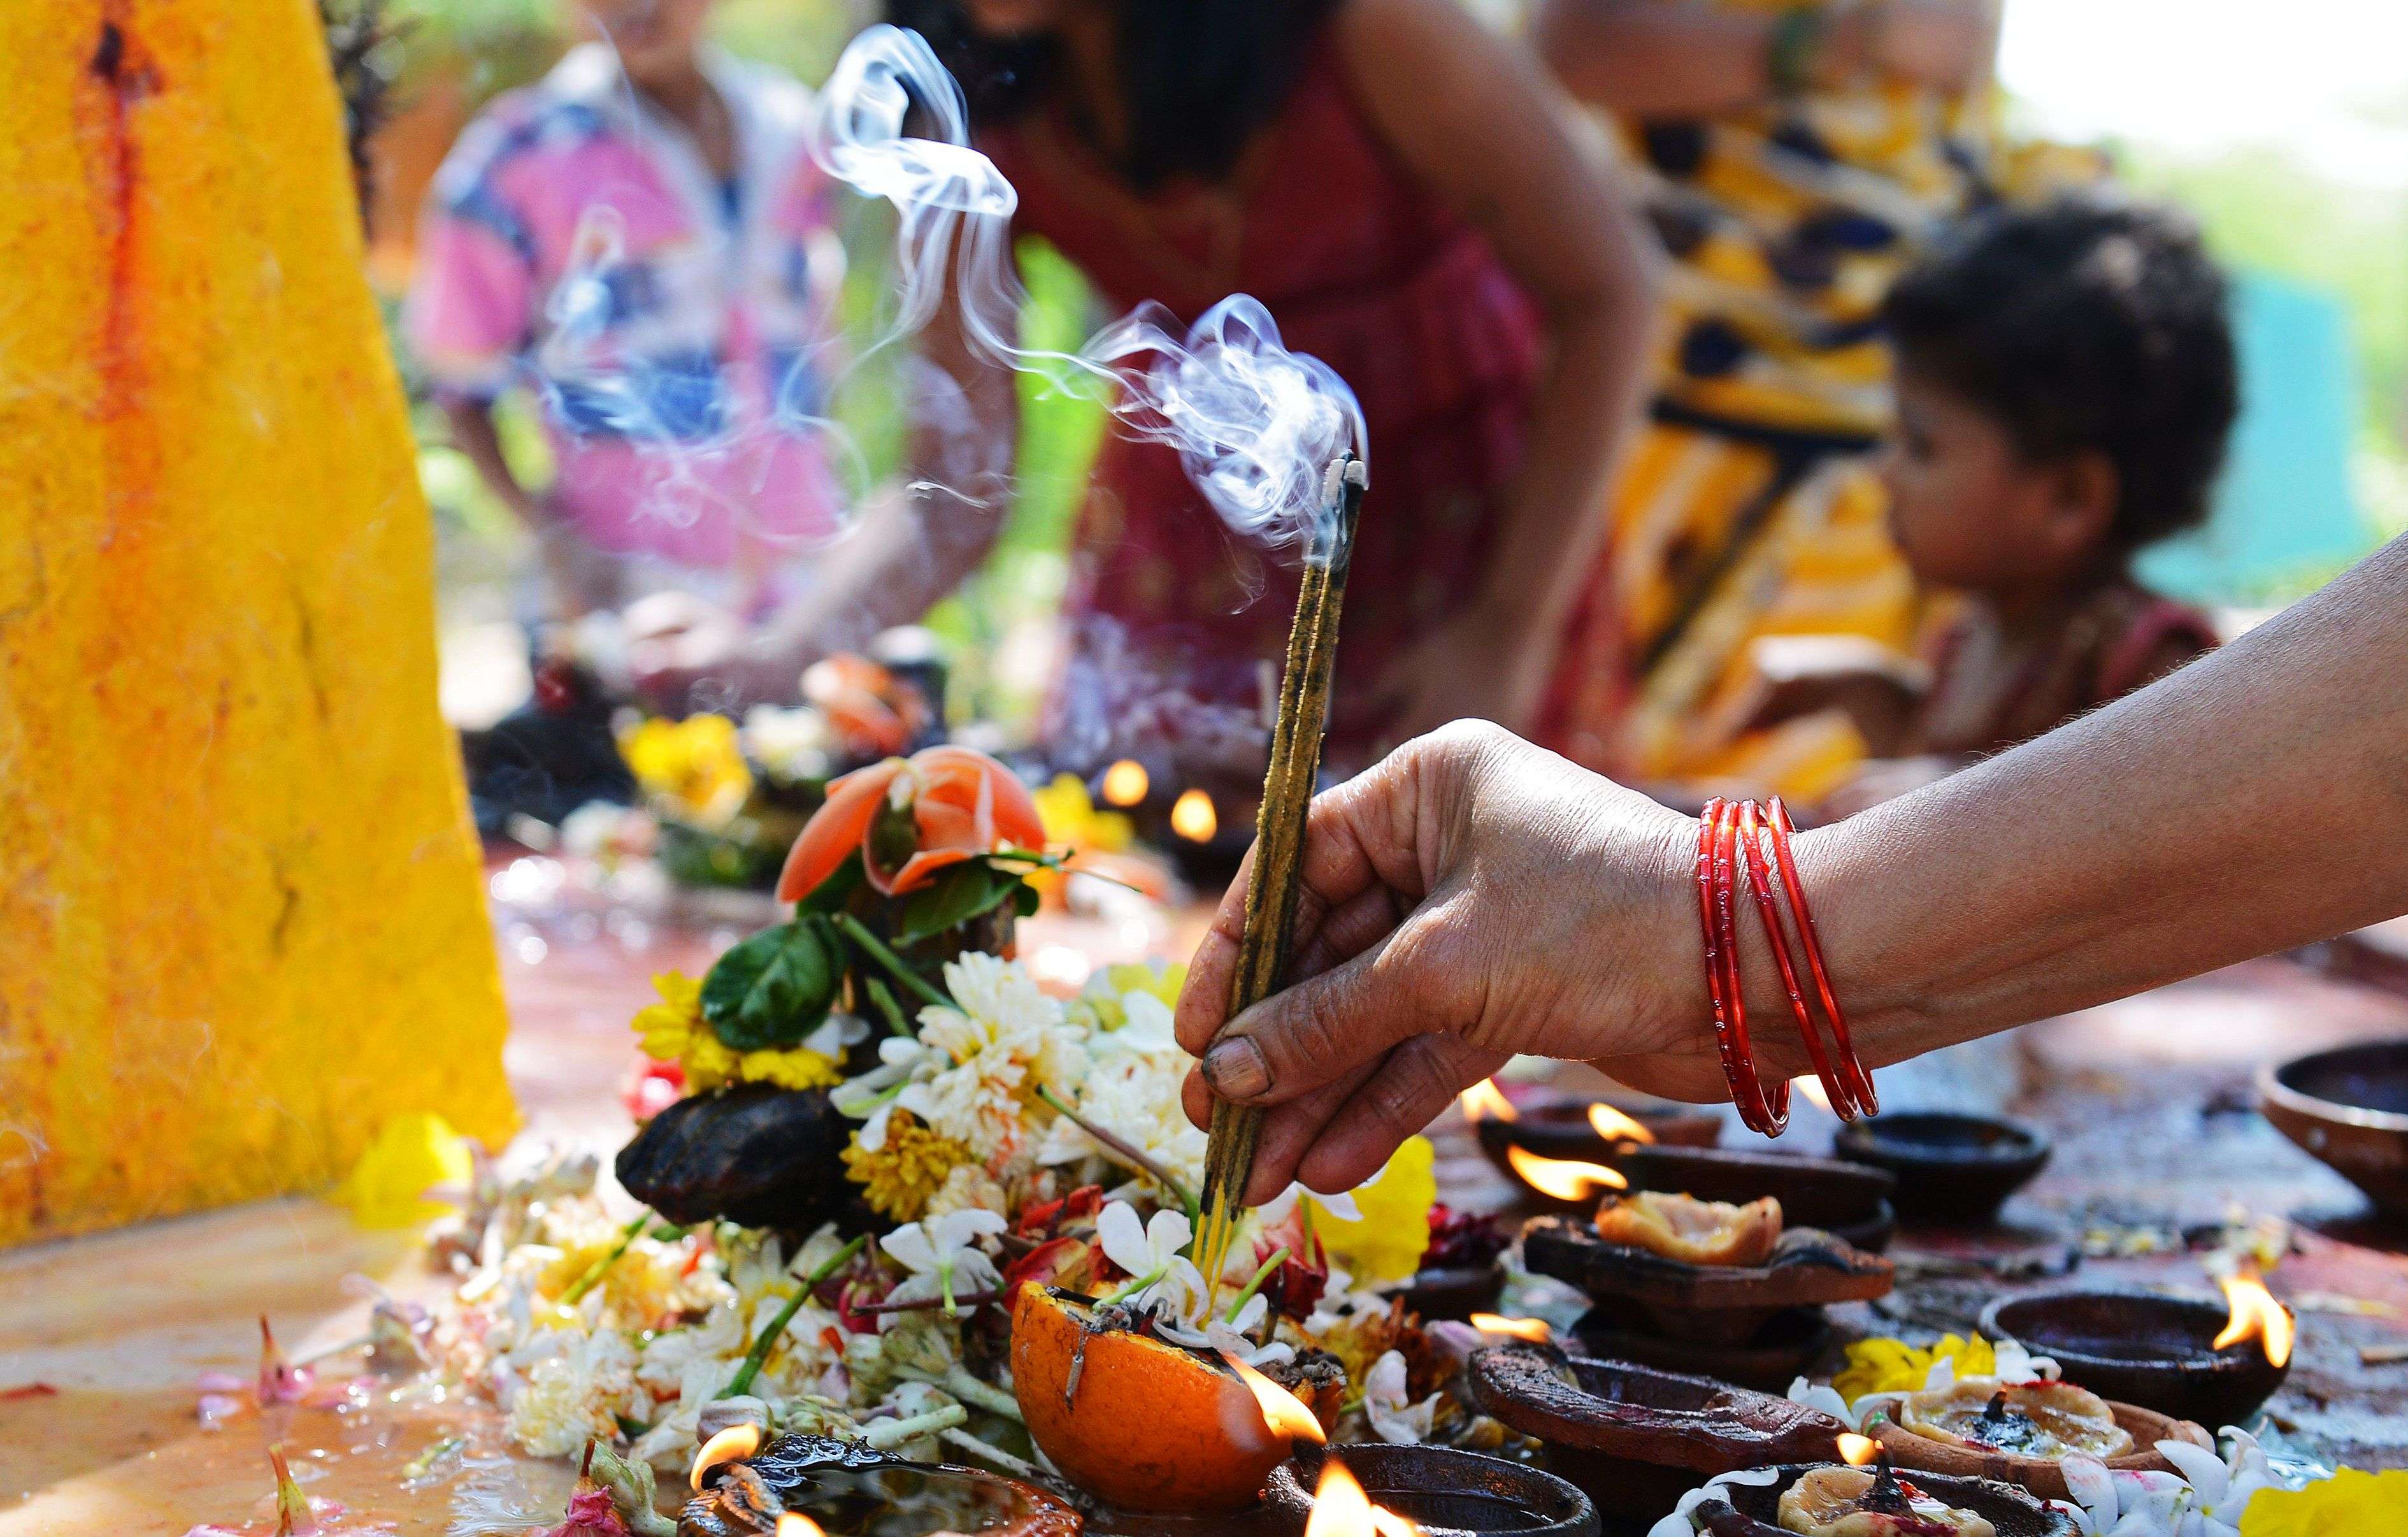 Indian devotees offer prayers to a Shiva lingam to mark the Maha Shivaratri festival at the Shiva Mandir in Hyderabad. (AFP PHOTO / Noah SEELAM)